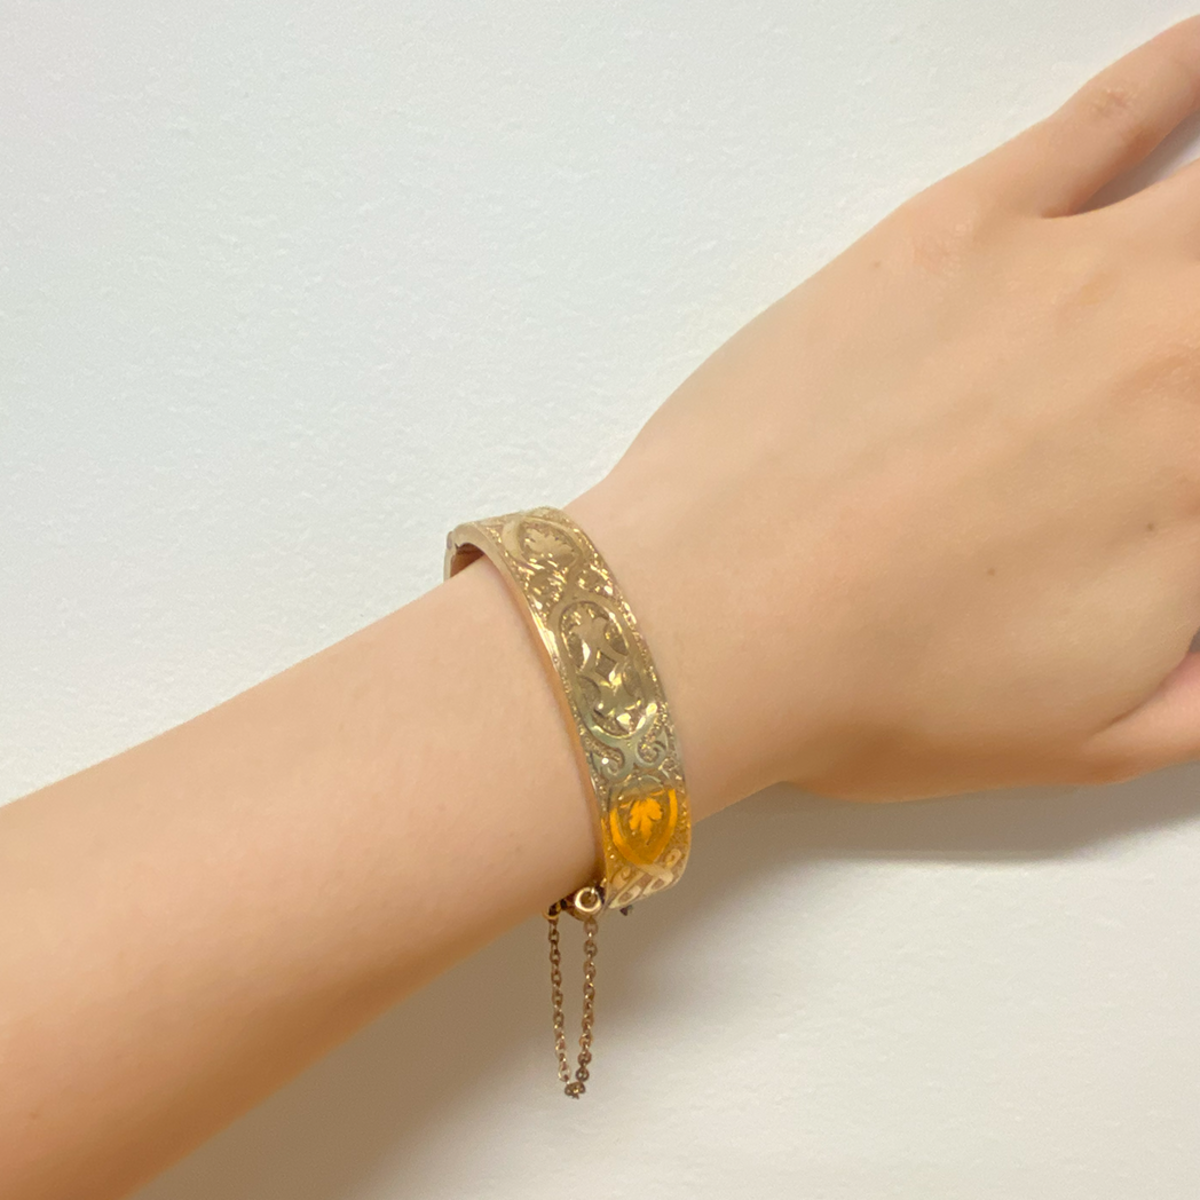 Victorian 14KT Yellow Gold Bracelet worn on wrist